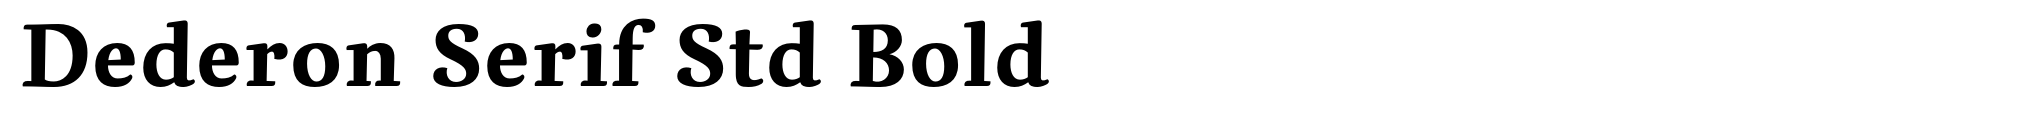 Dederon Serif Std Bold image